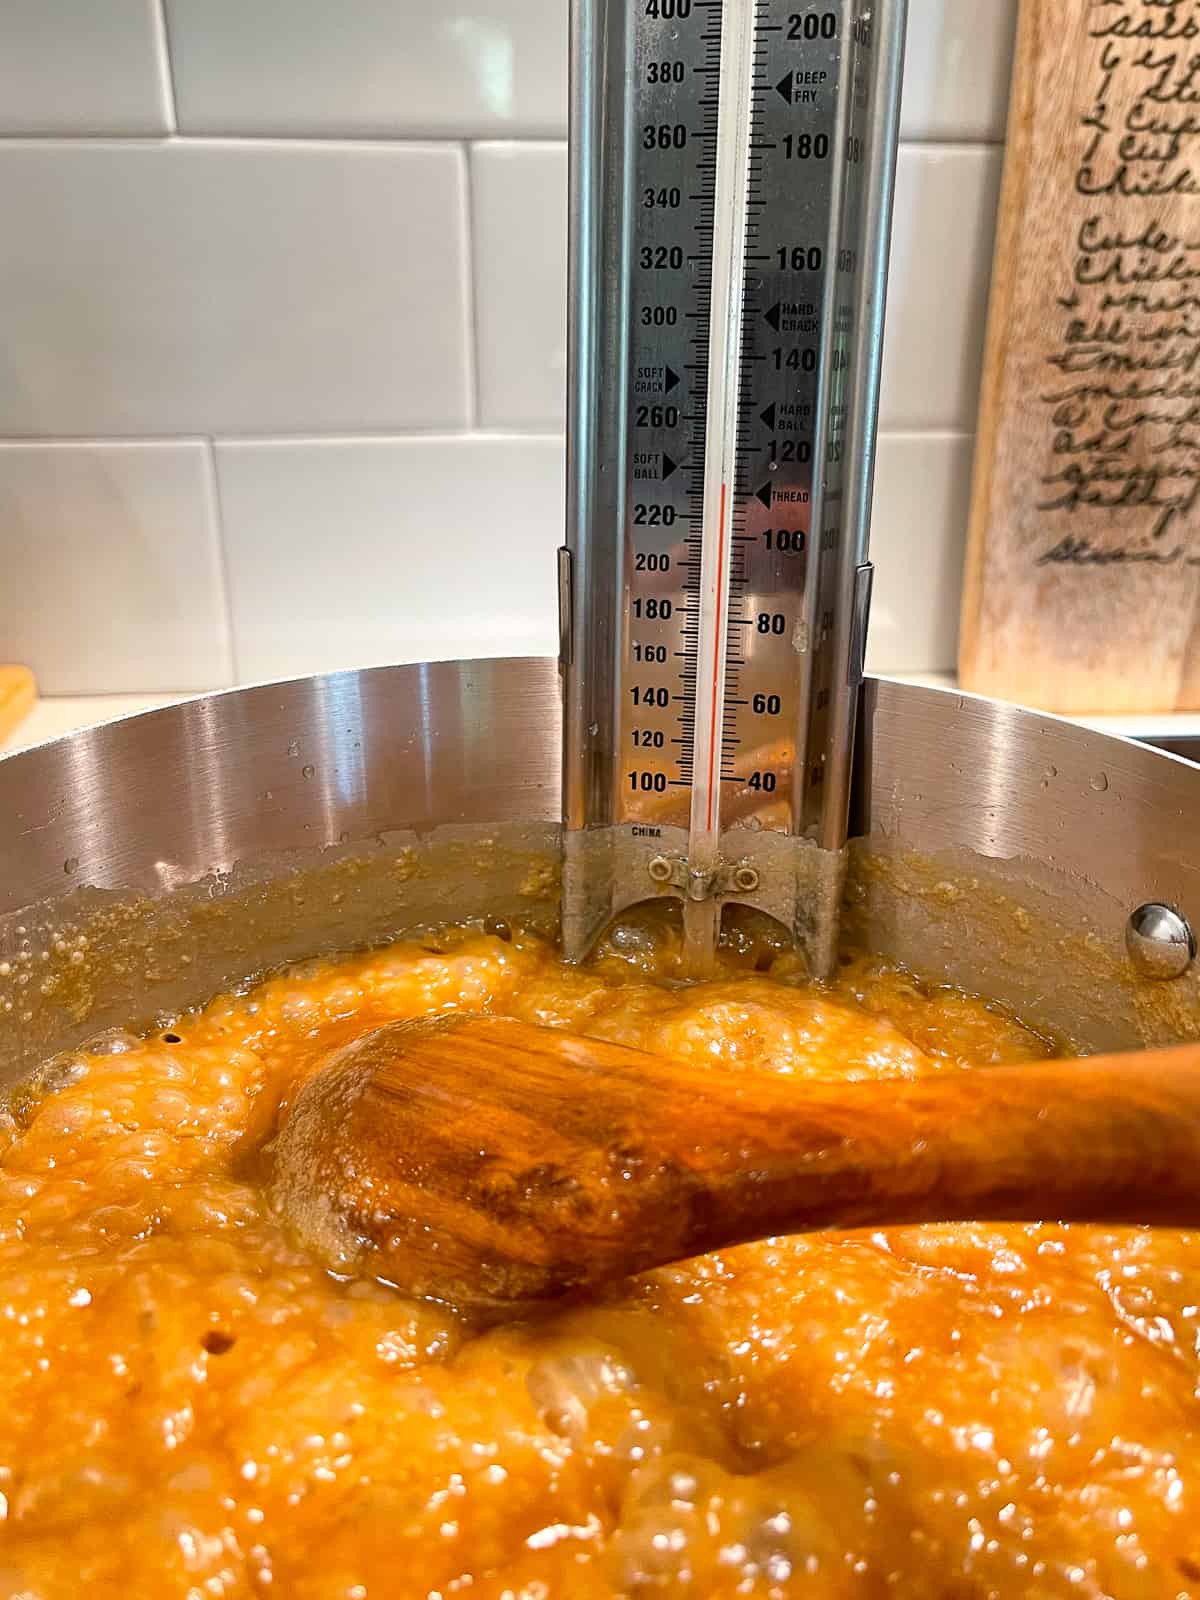 The caramel mixture at 235 degrees.